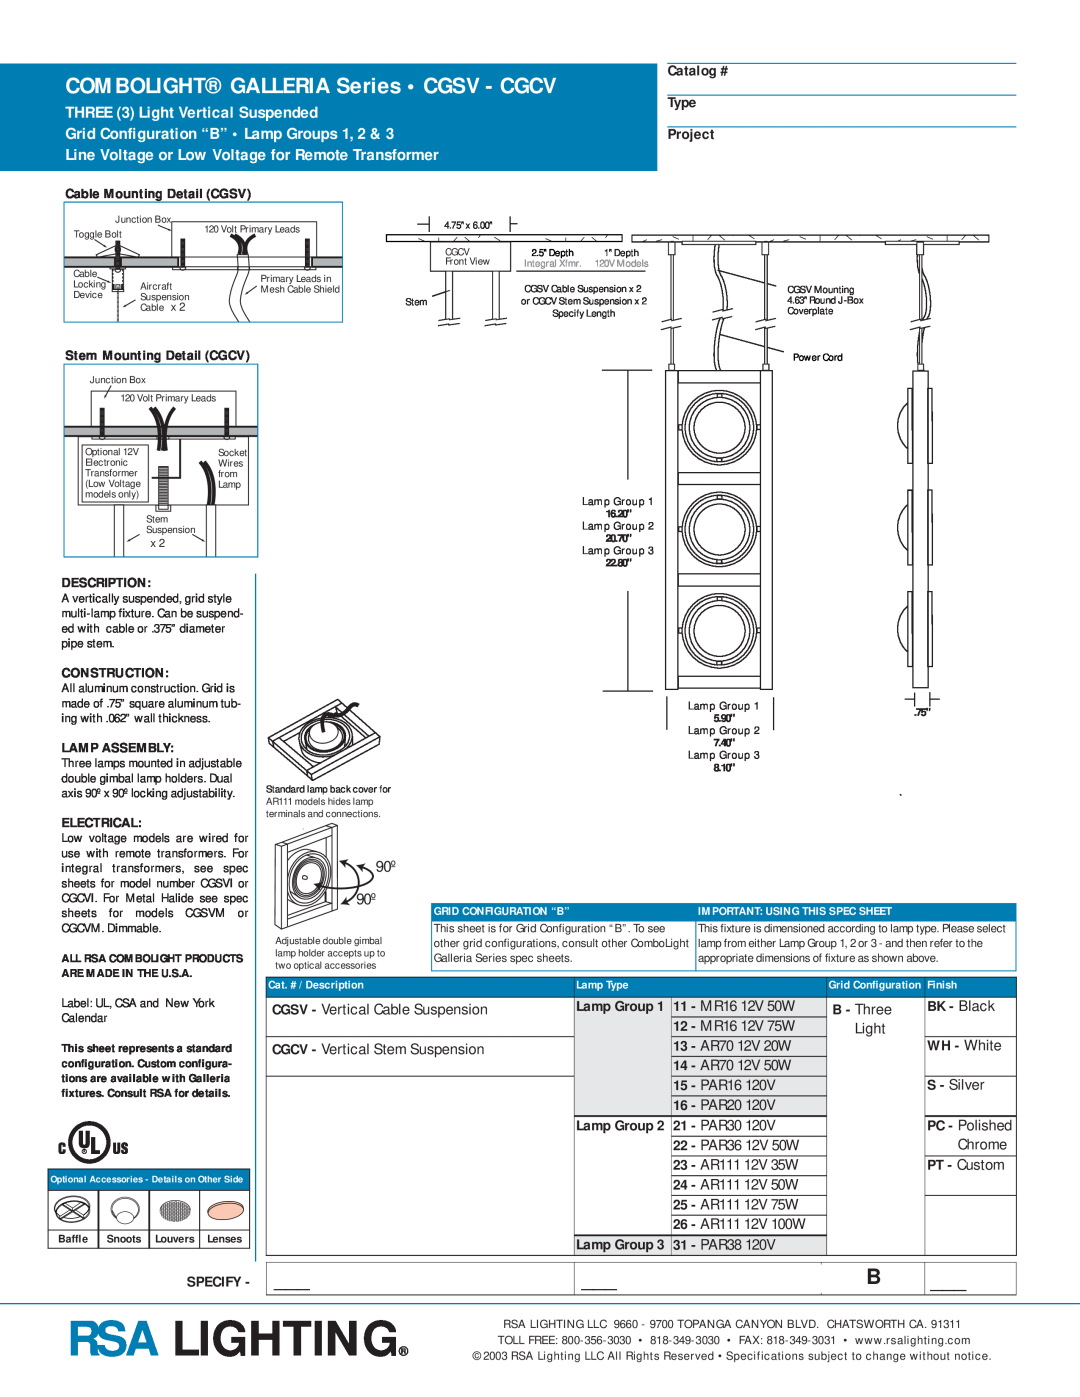 Cooper Lighting specifications COMBOLIGHT GALLERIA Series CGSV - CGCV, THREE 3 Light Vertical Suspended, Catalog # 